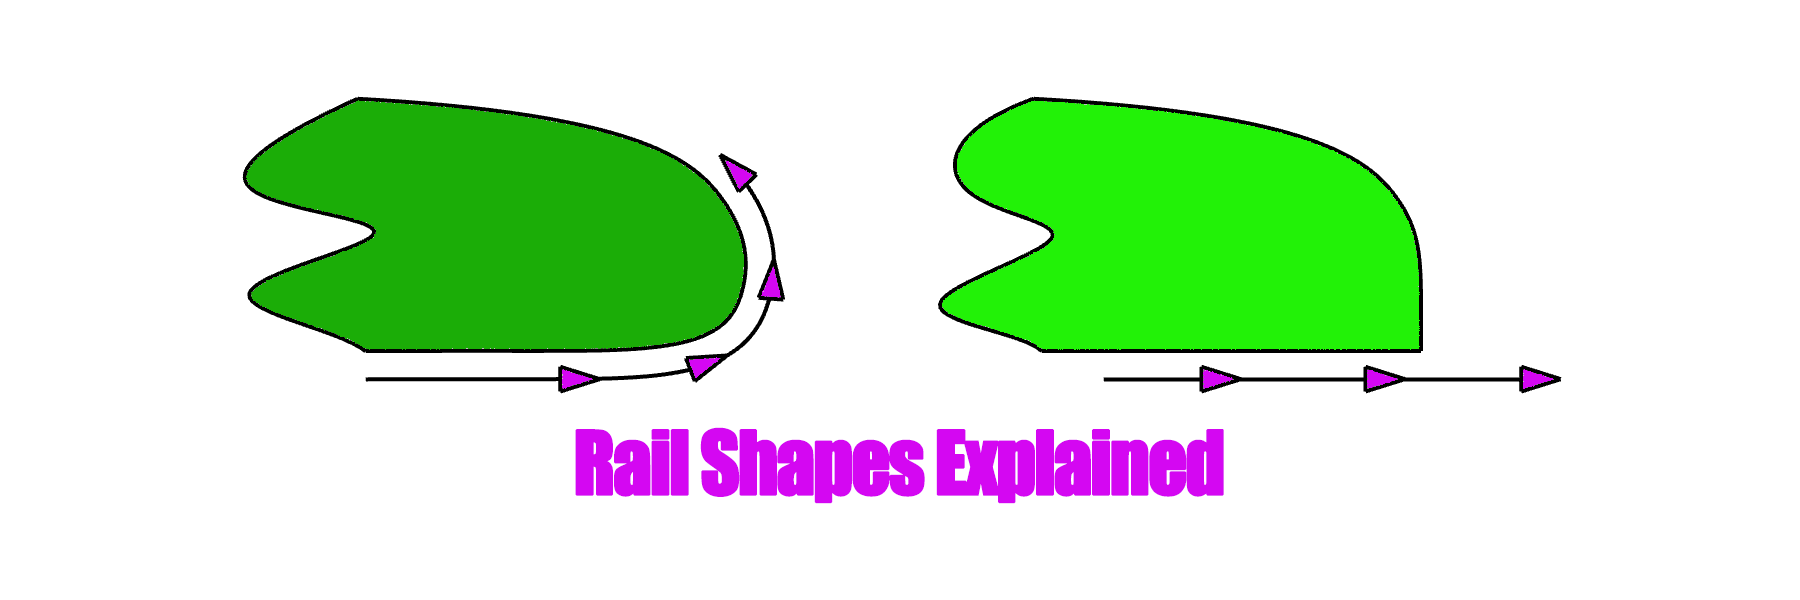 Surfboard Rail Shapes Explained